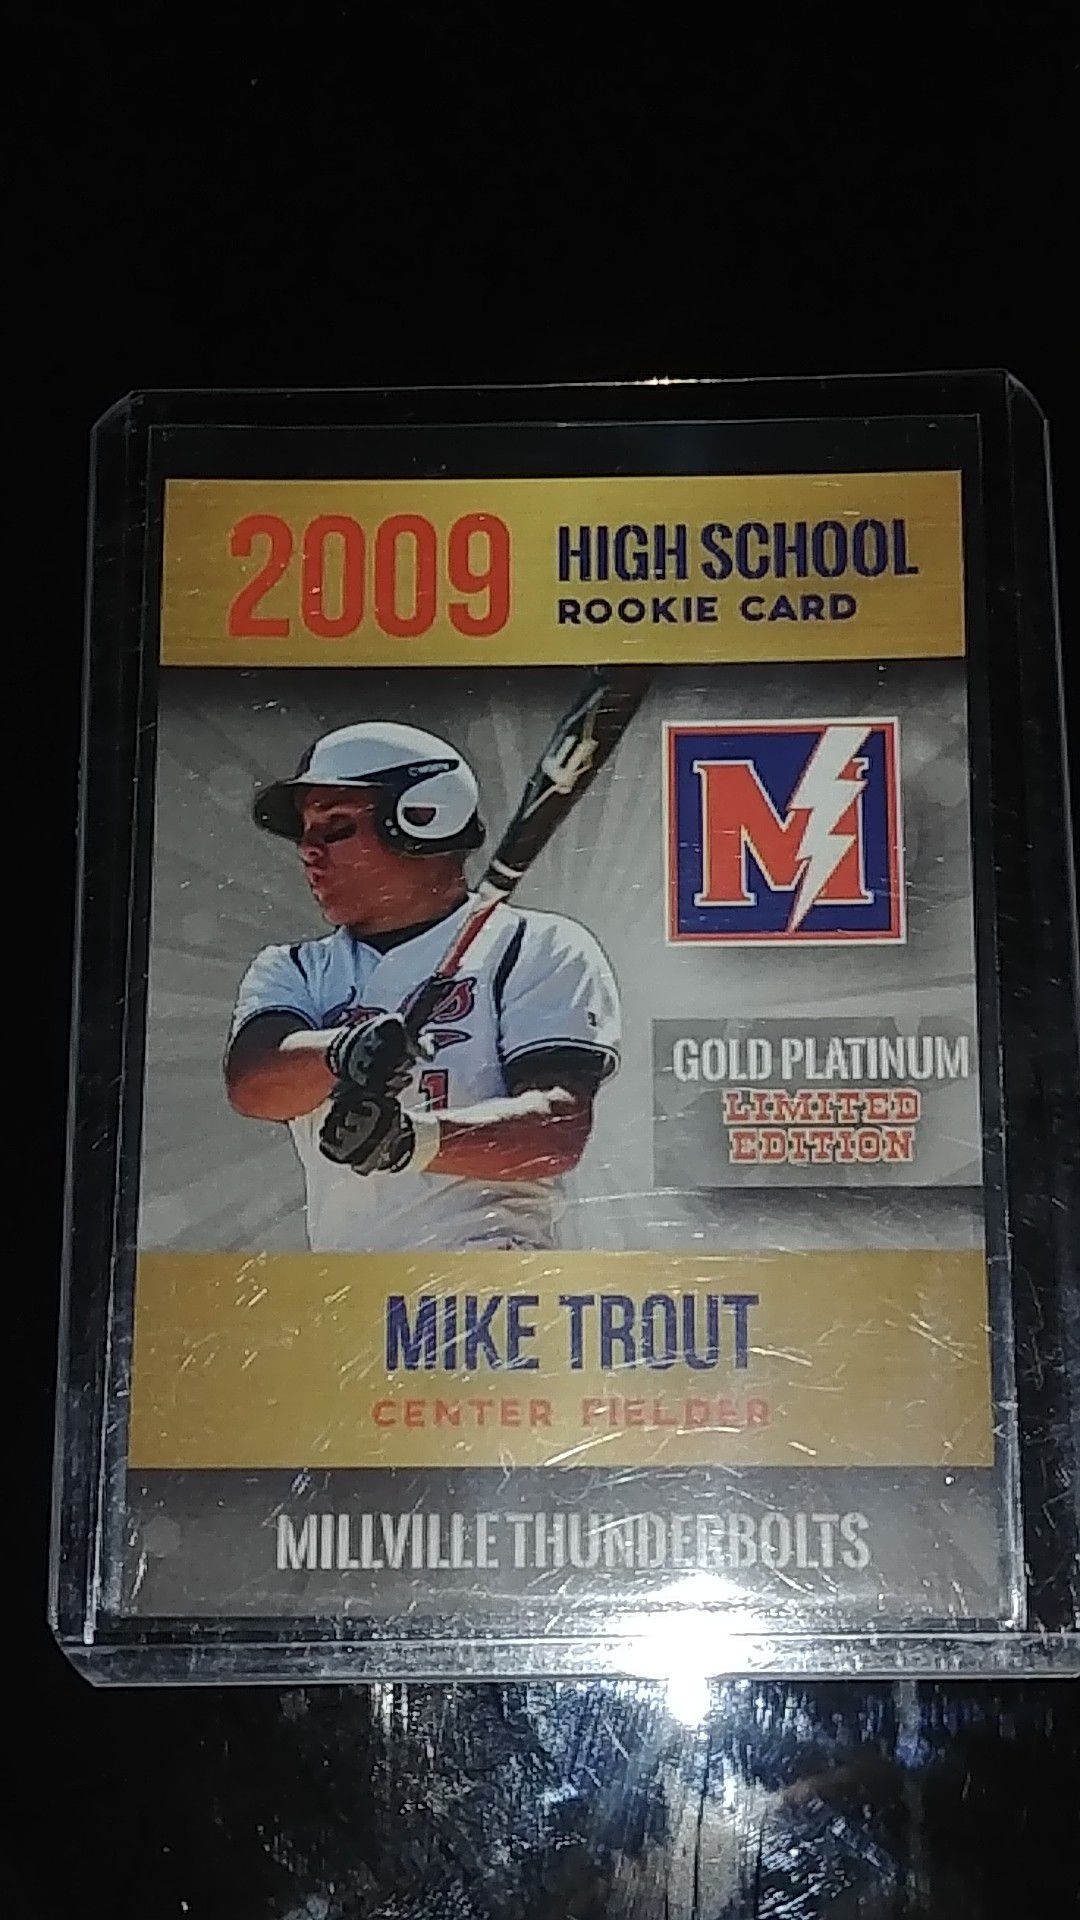 2009 Mike Trout High School Baseball Card